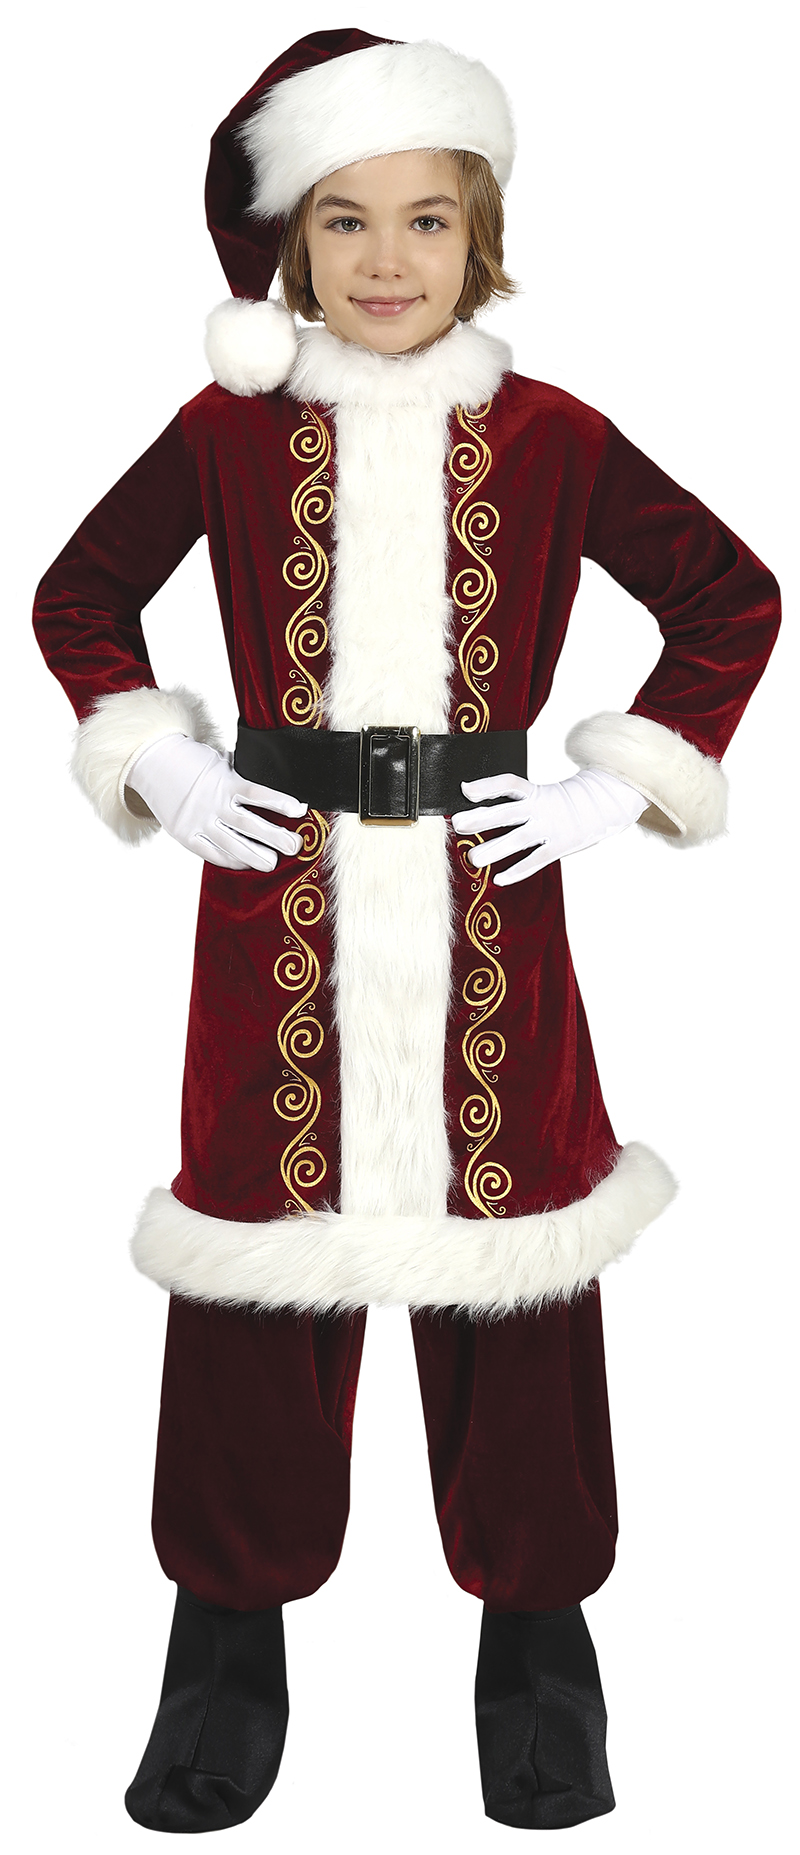 Guirca Dětský kostým - Santa Claus bordový Velikost - děti: S